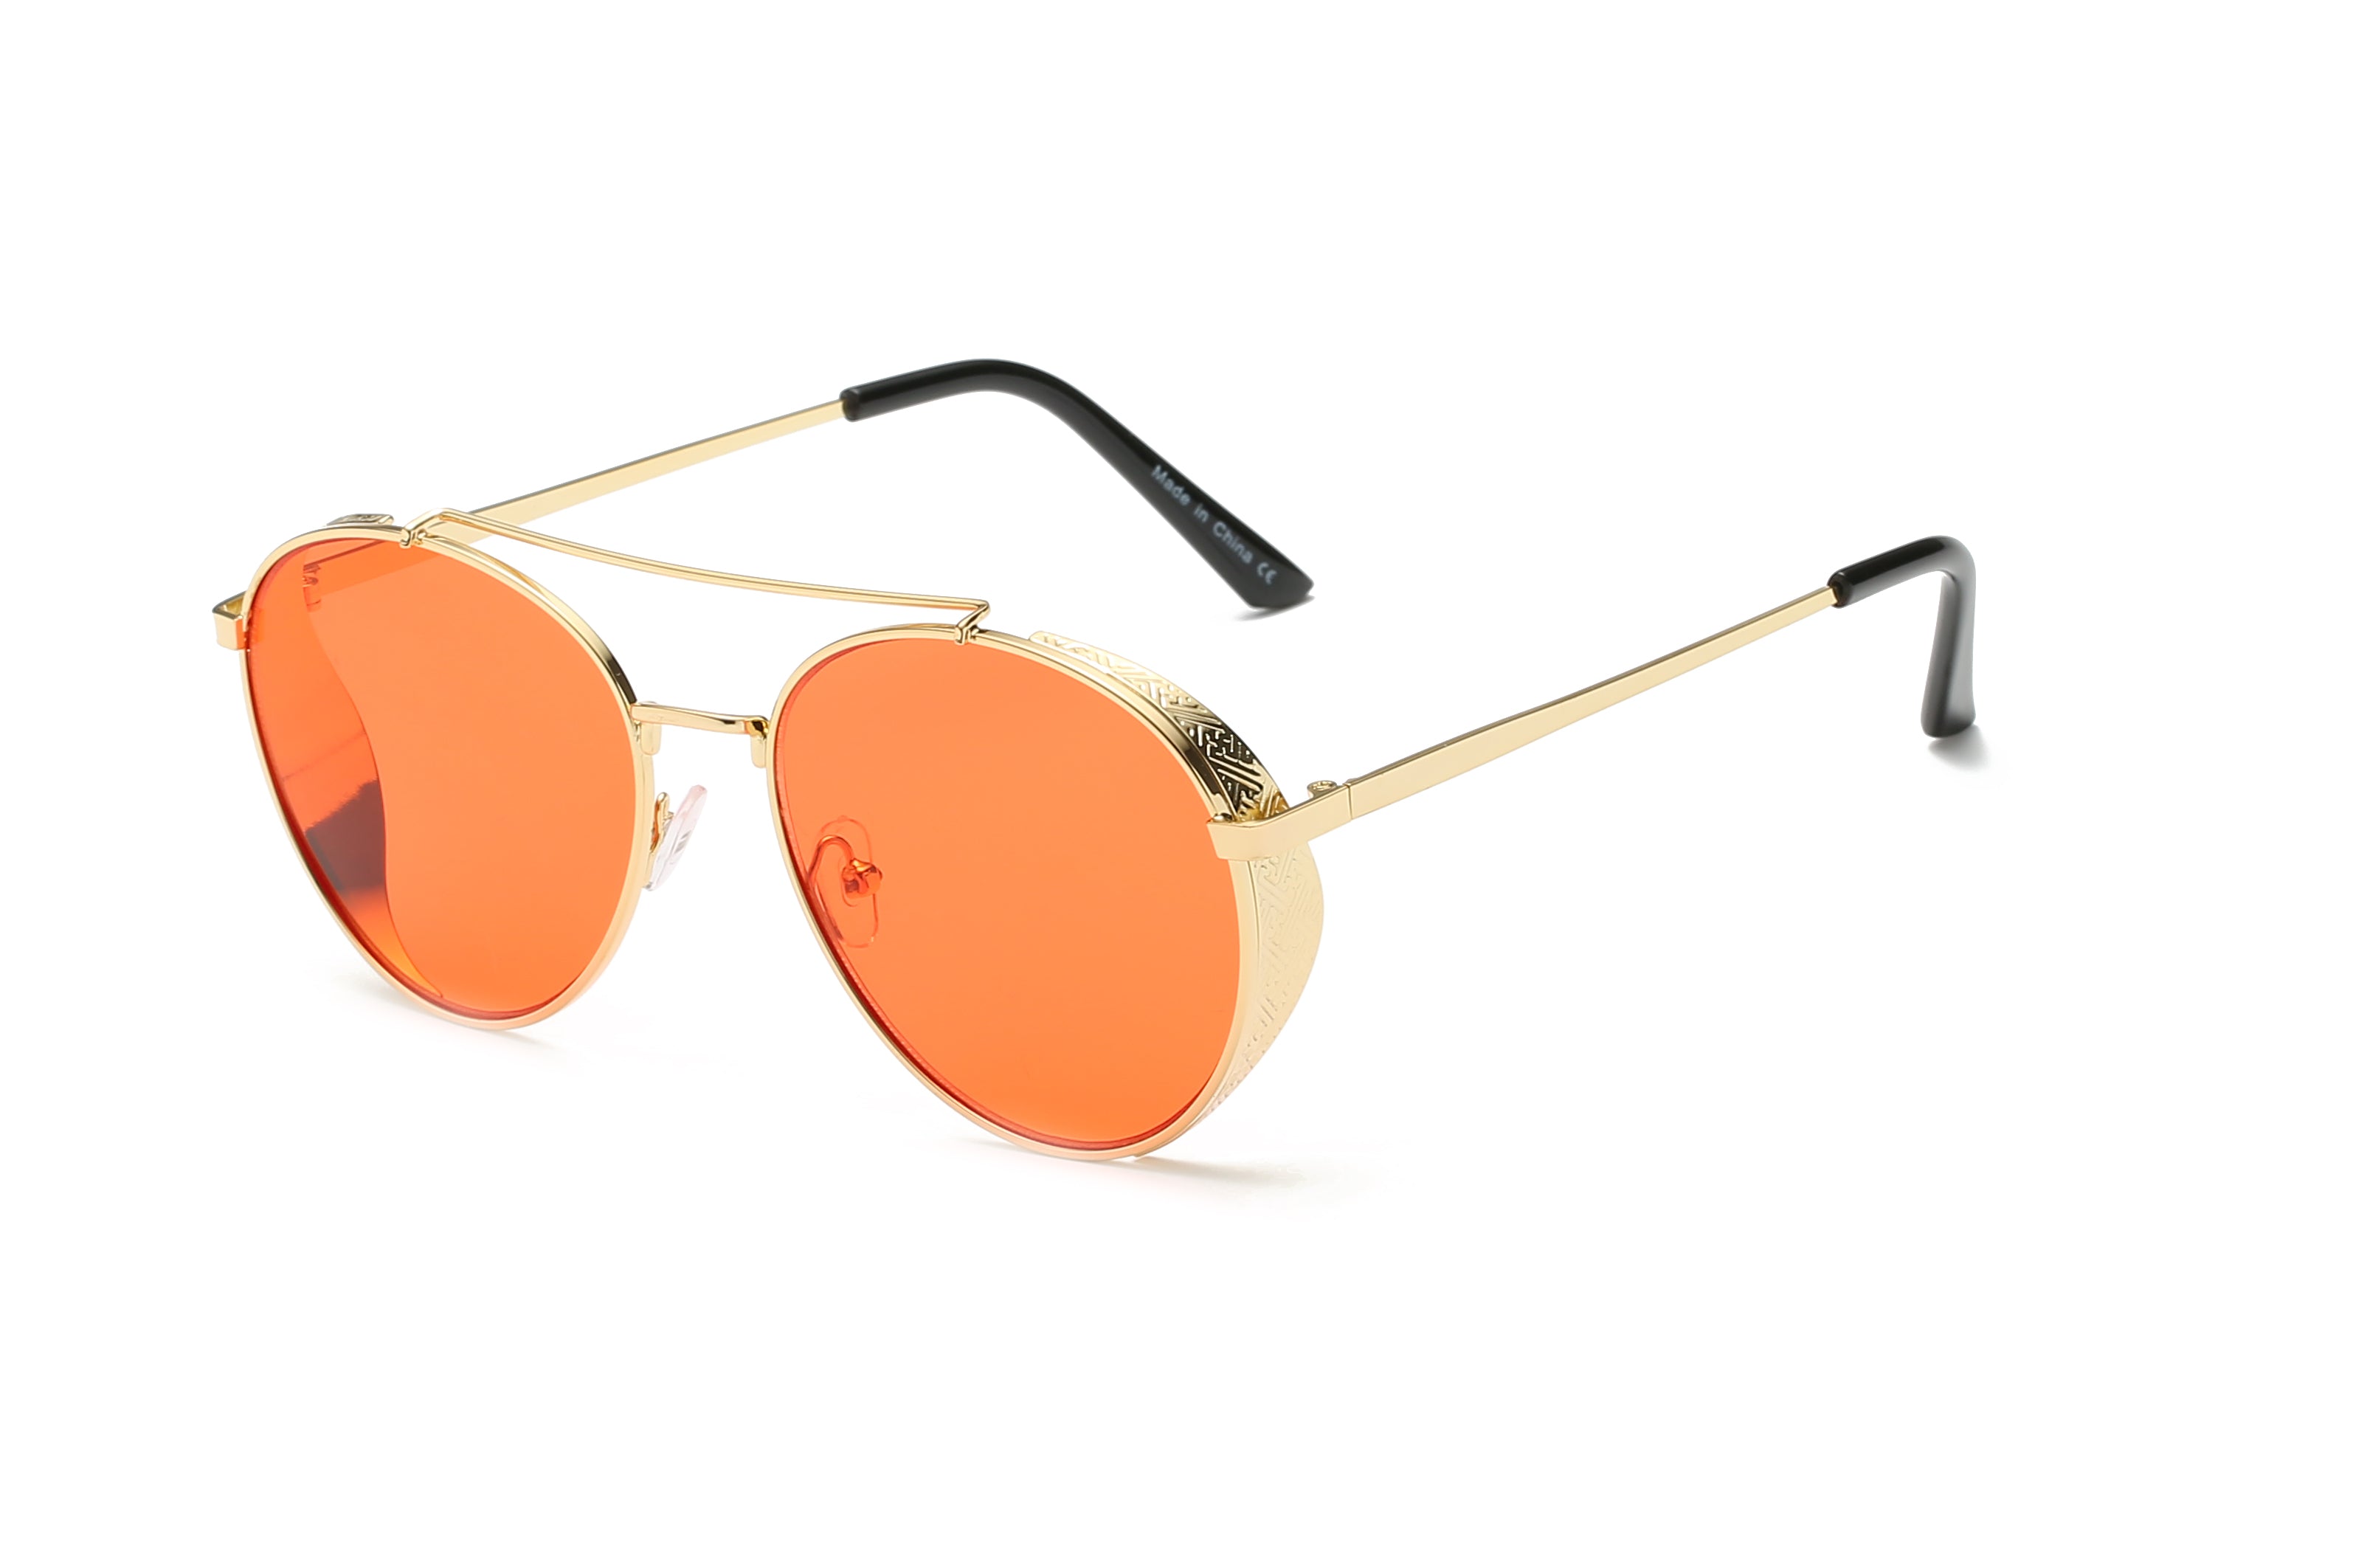 S2072 - Modern Aviator Fashion Sunglasses Red